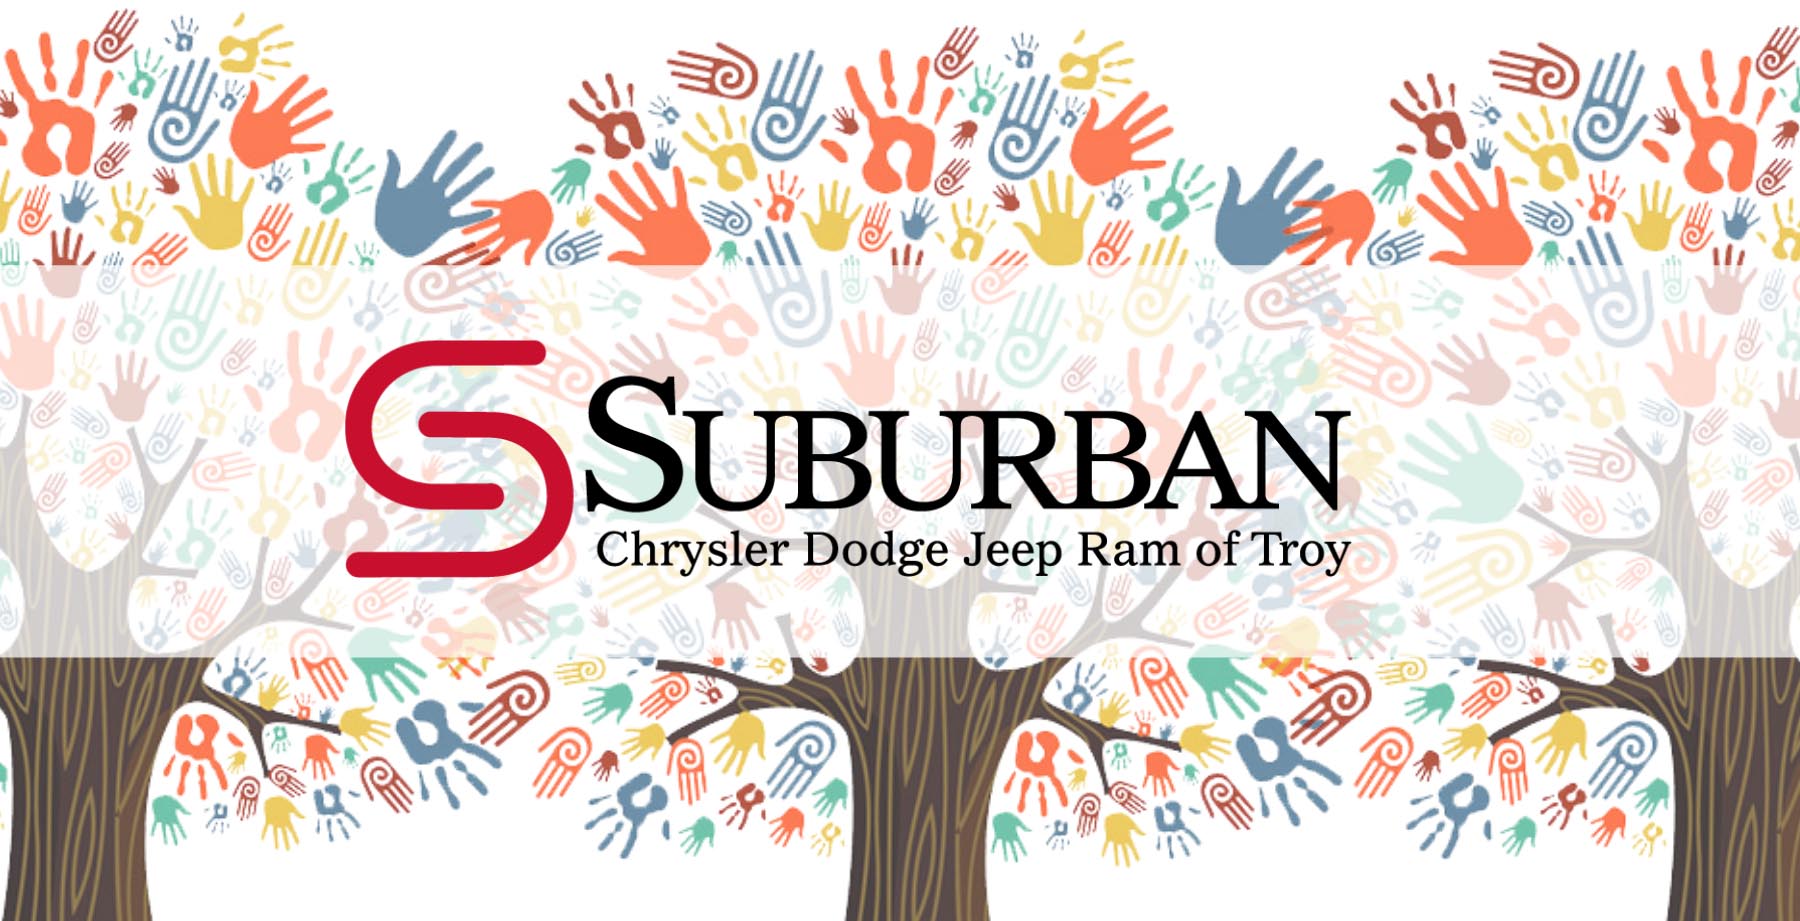 Suburban Chrysler Dodge Jeep Ram of Troy